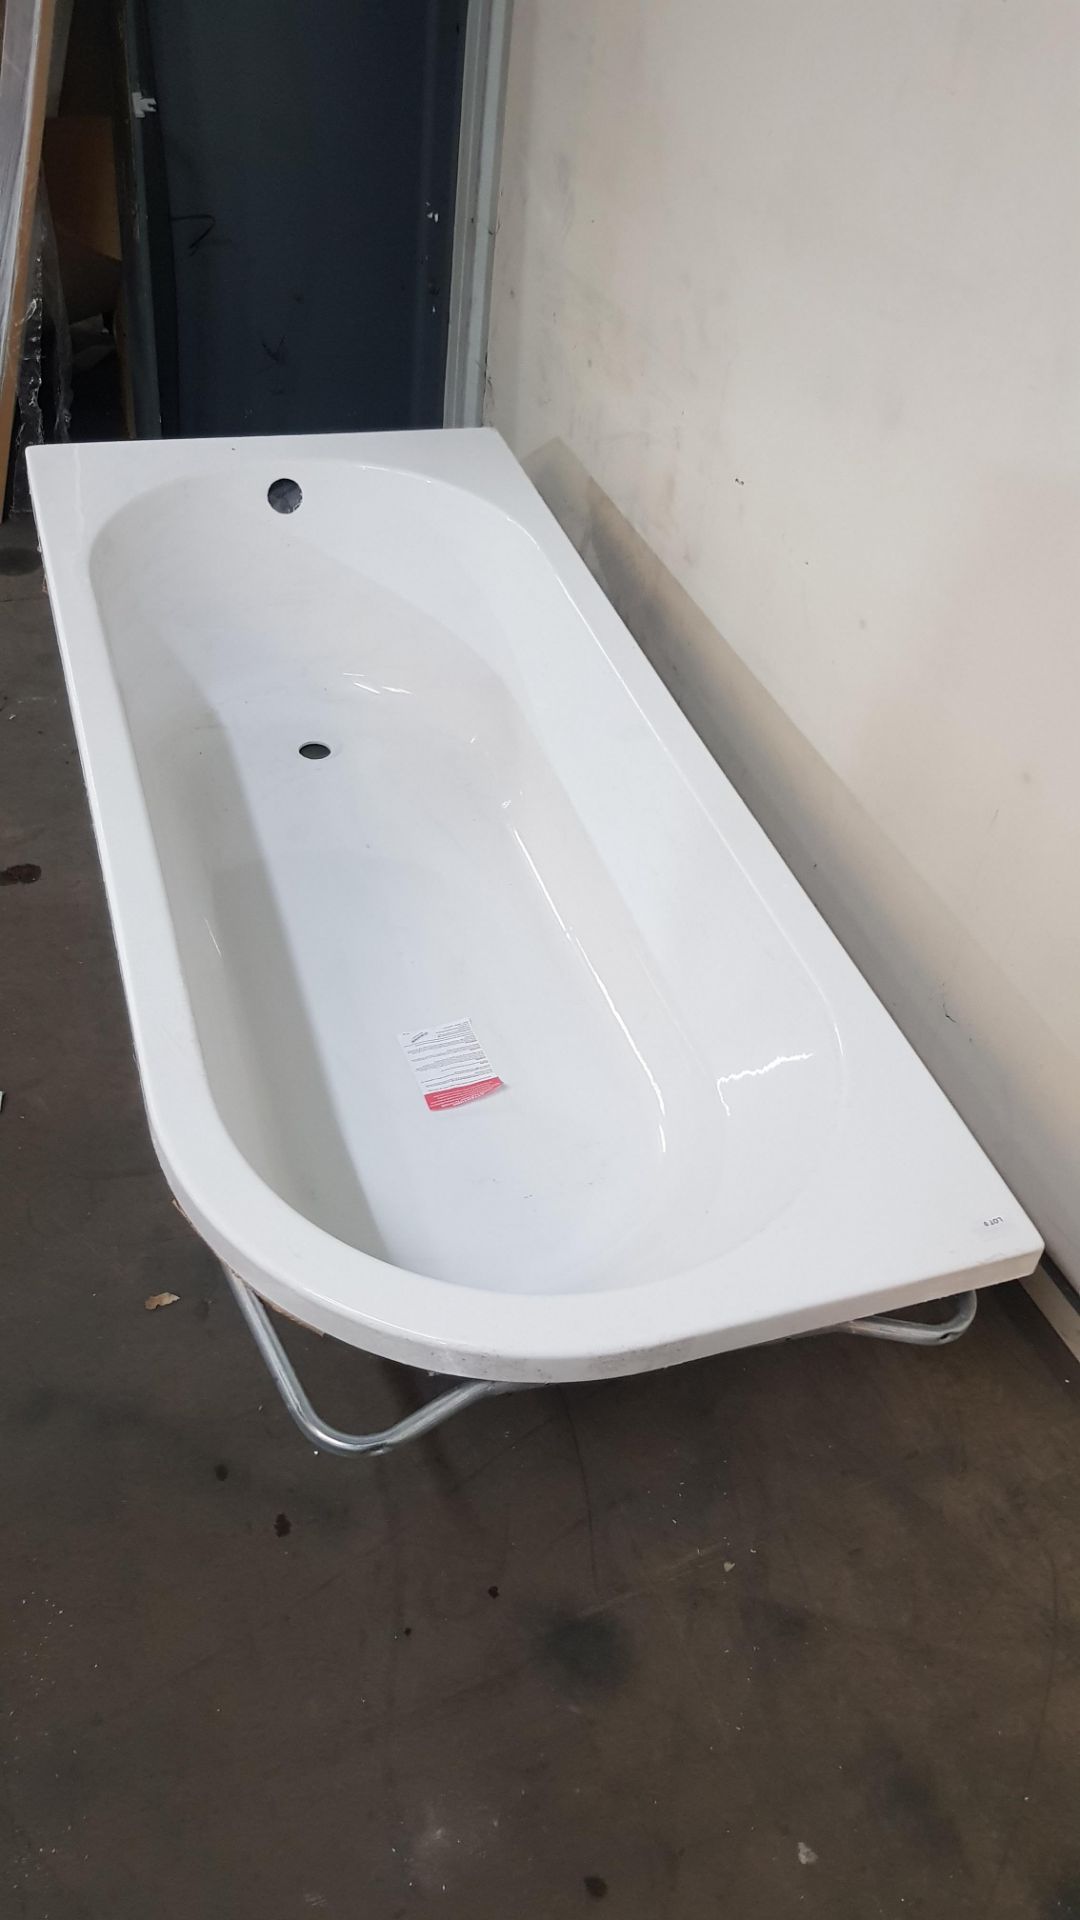 J Shaped 1700x750mm LH Single Ended Bath (Minor Surface Damage) - Image 2 of 4